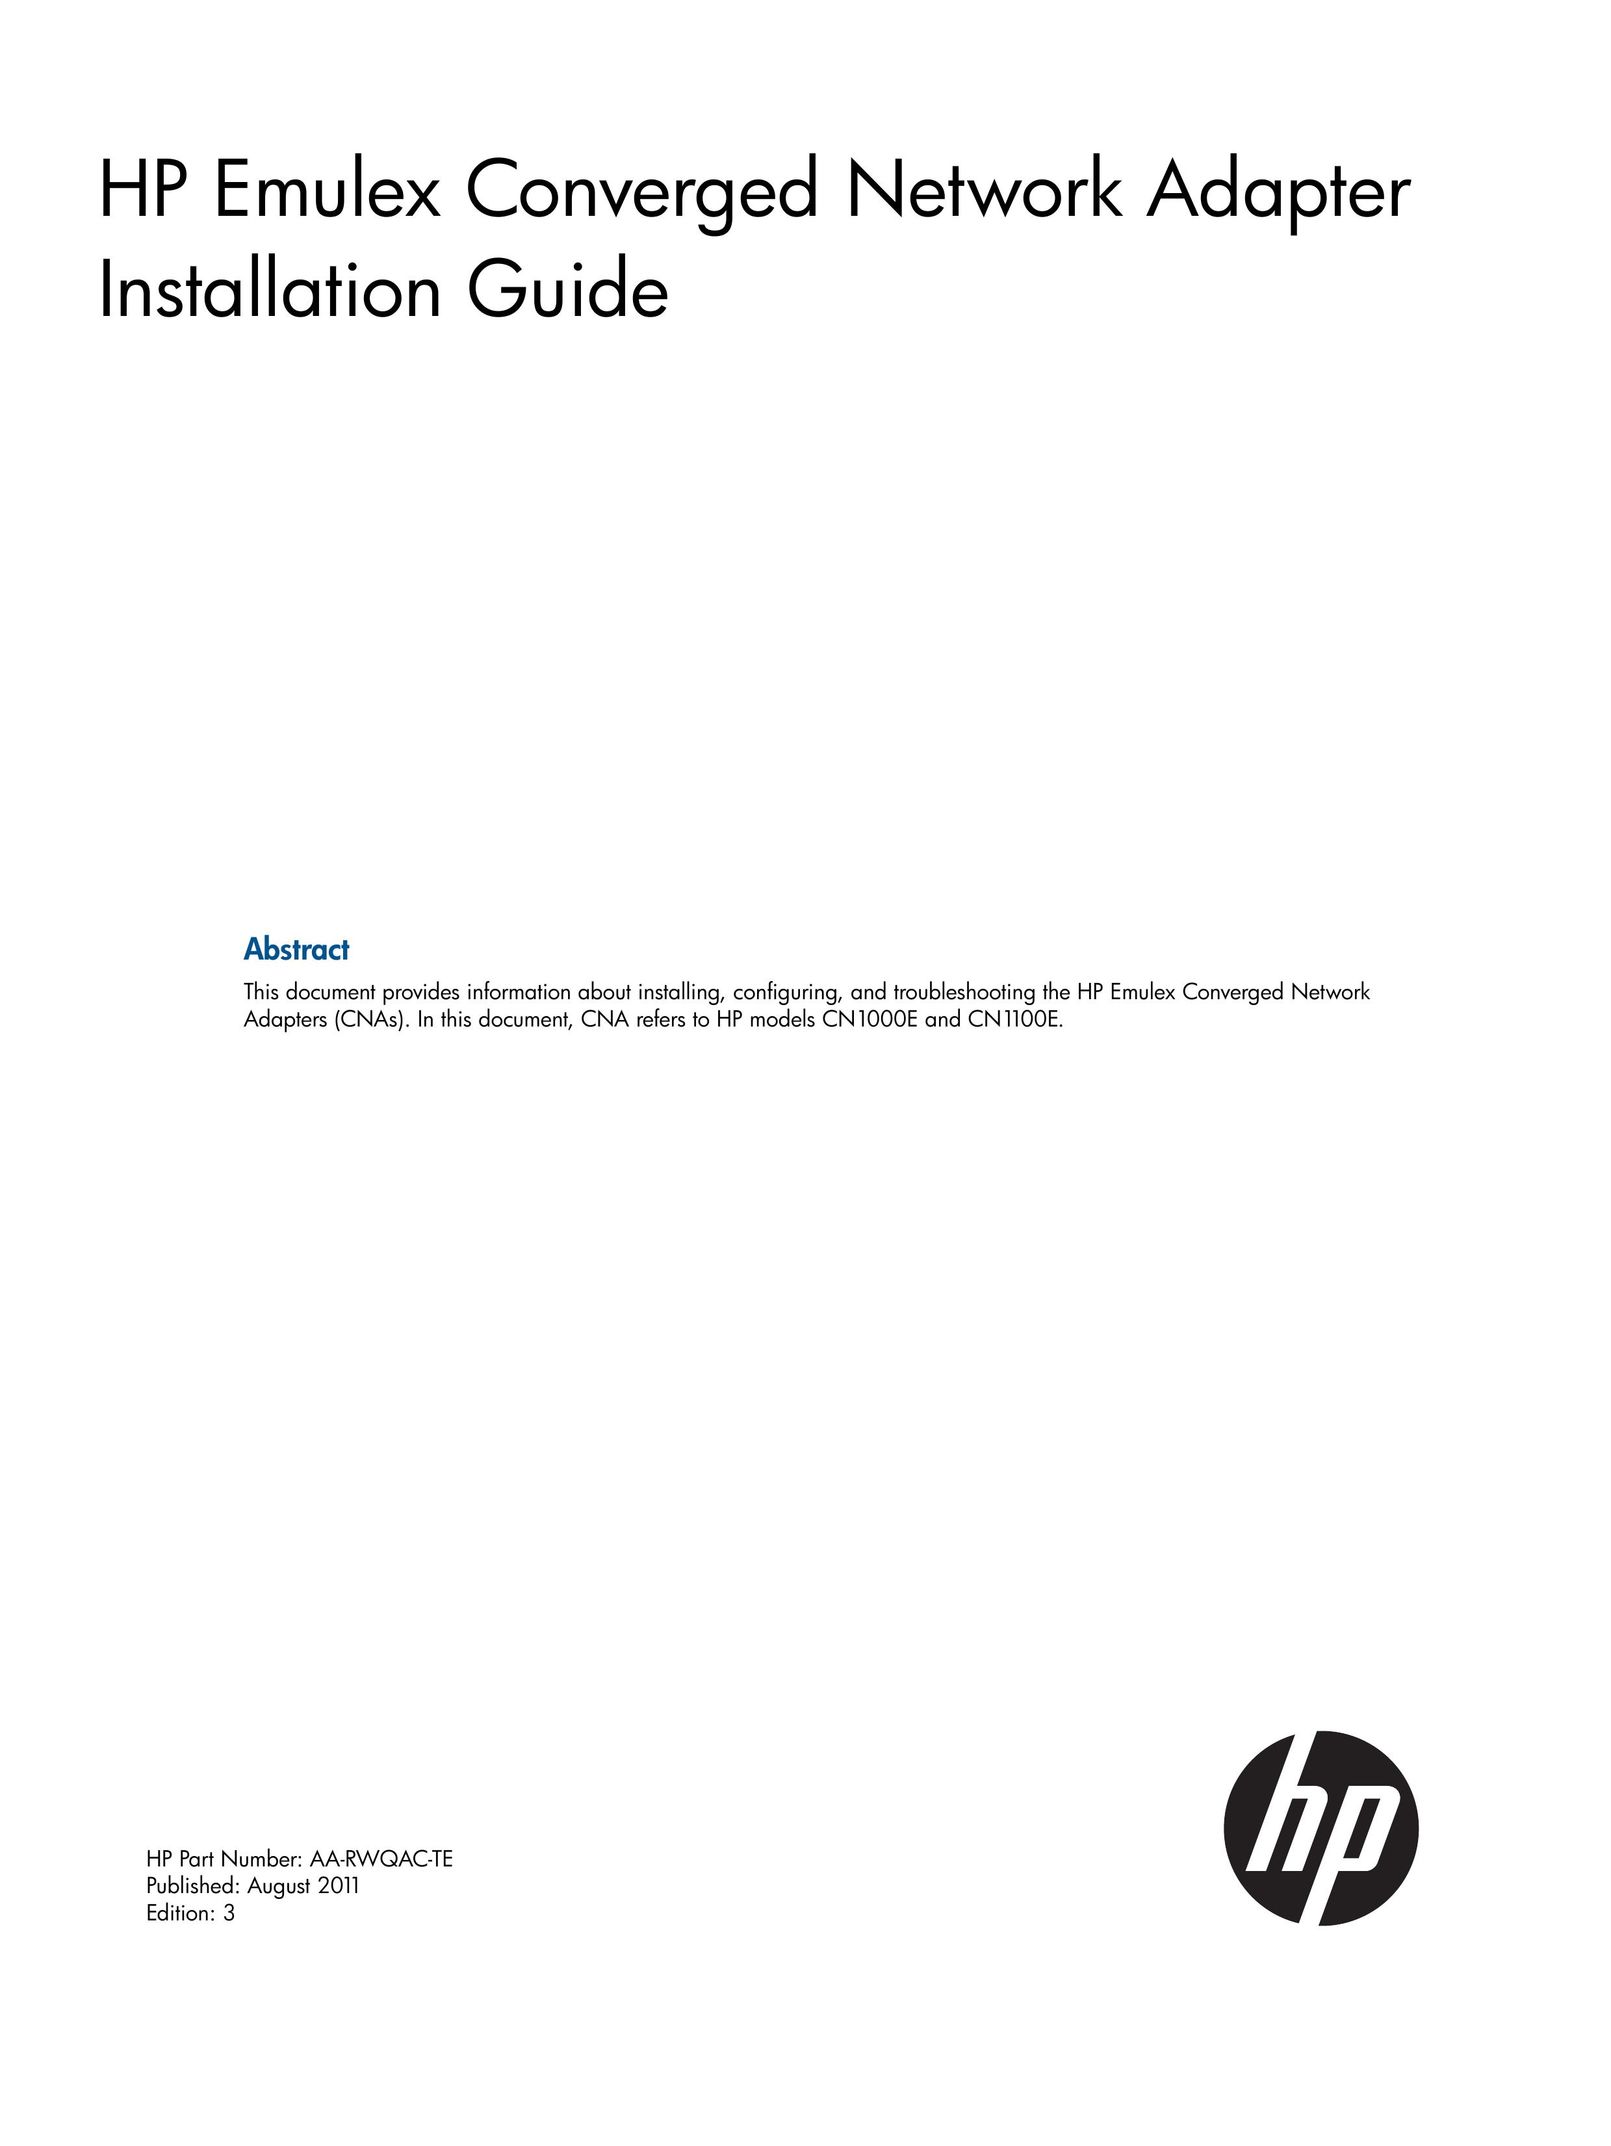 HP (Hewlett-Packard) CN1000E Network Cables User Manual